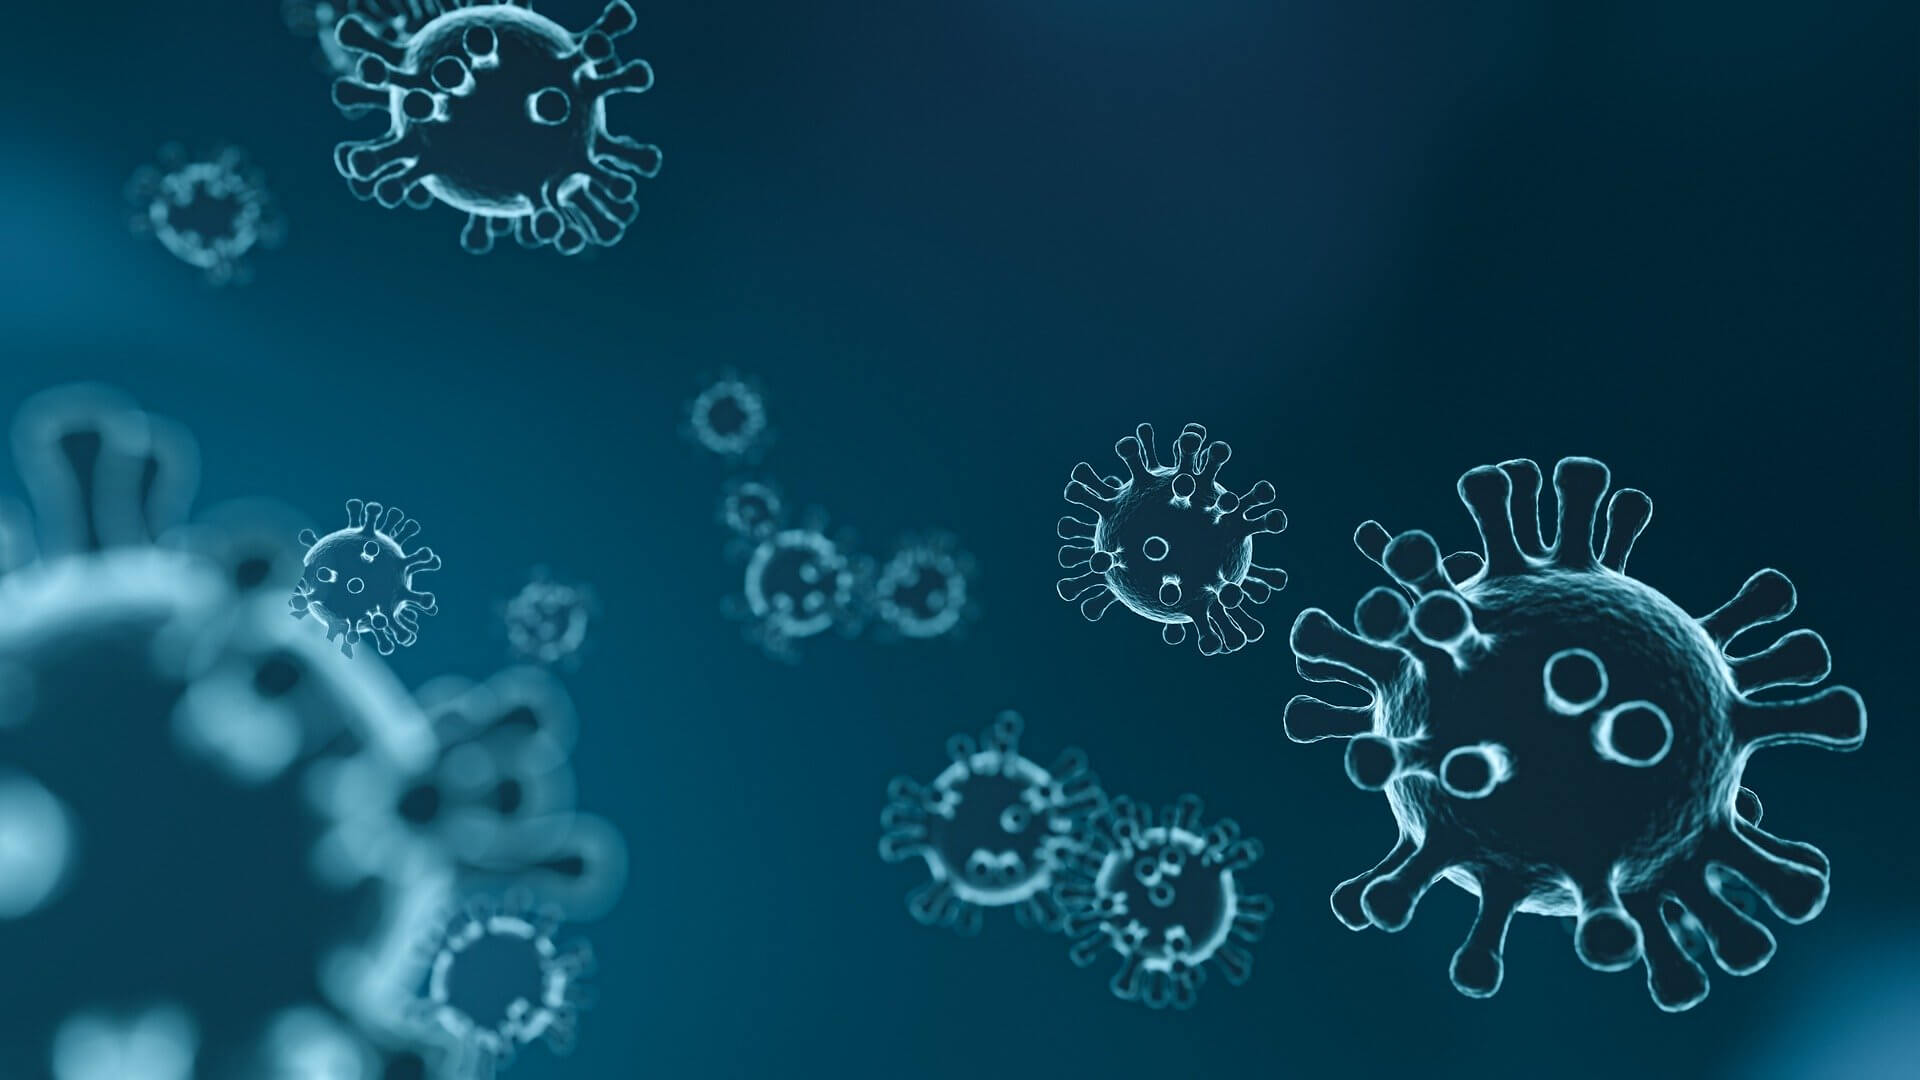 Decontamination wipe could help coronavirus clean-up efforts